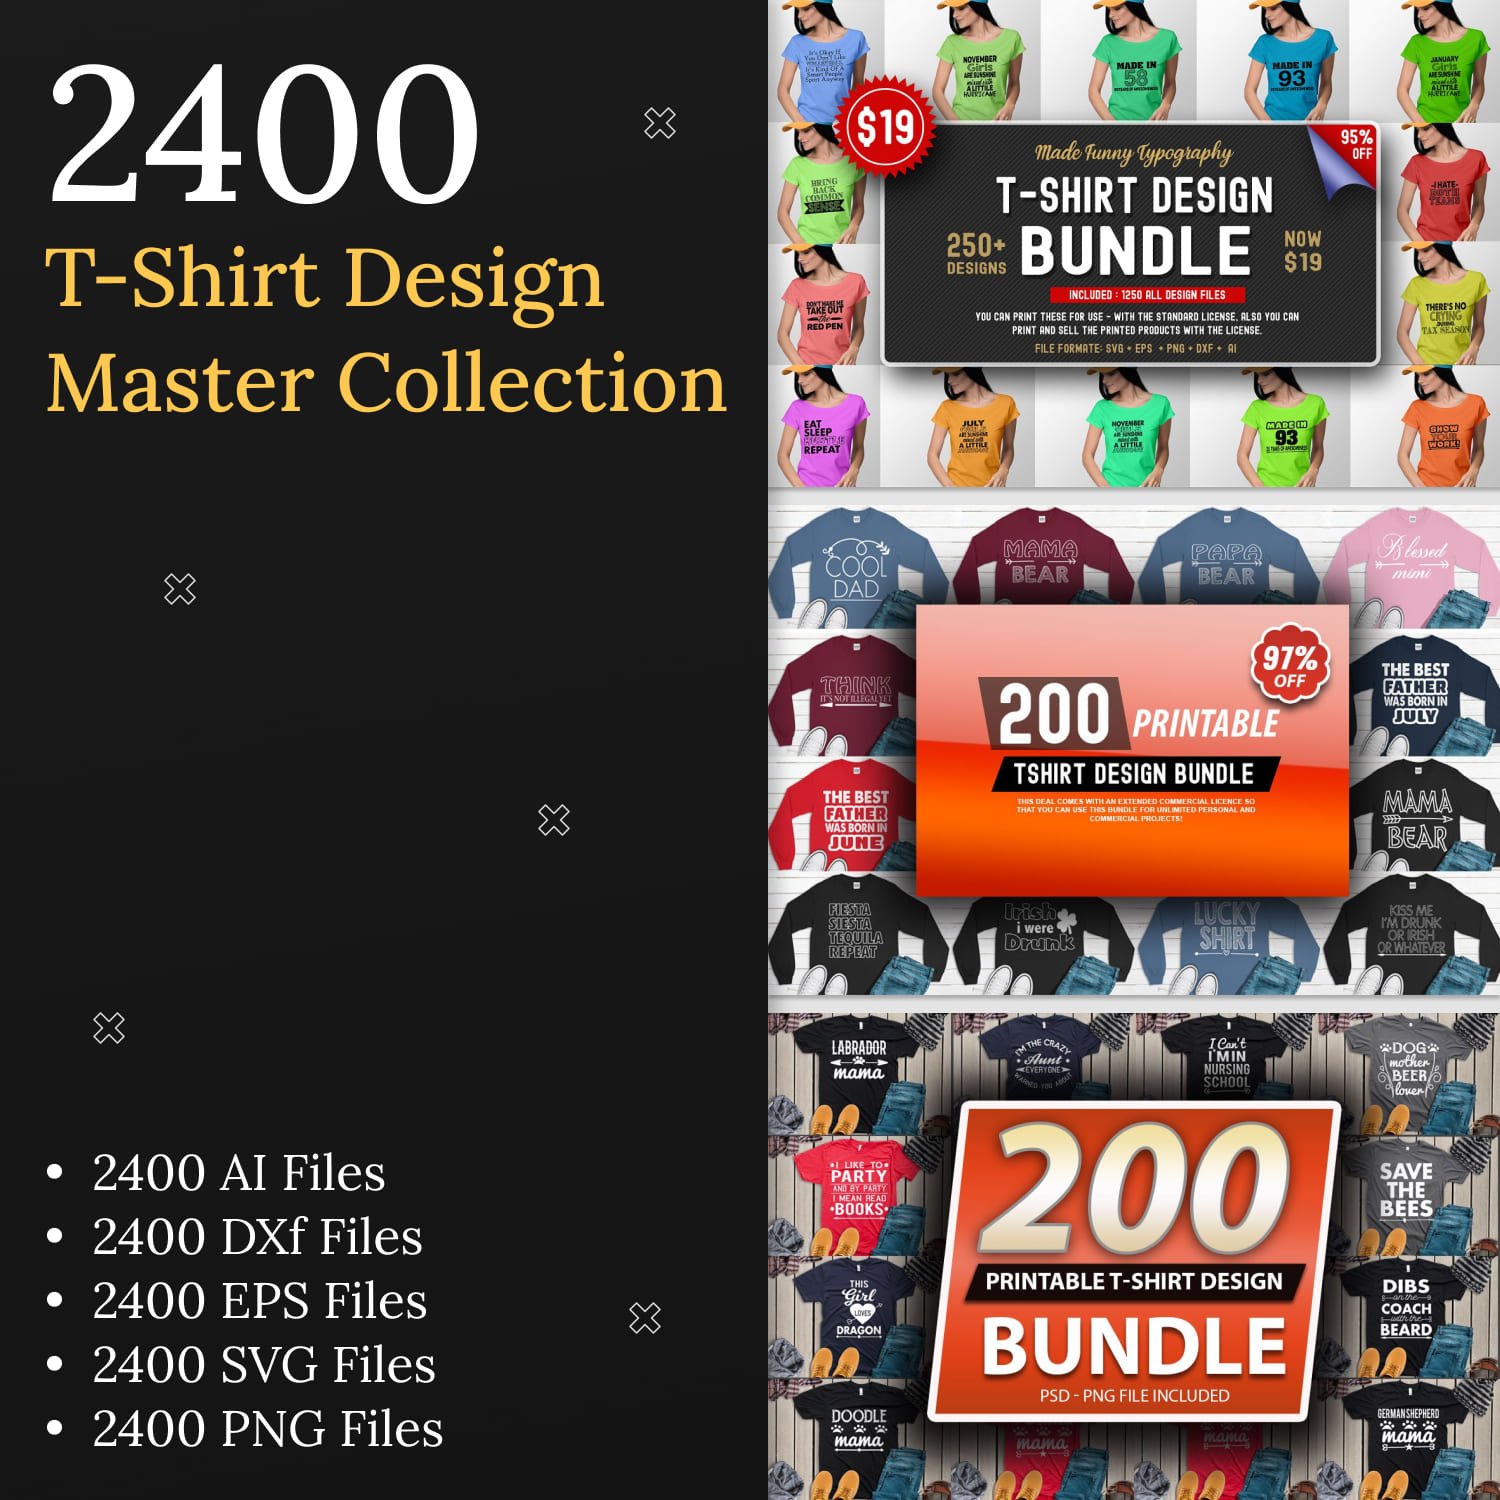 2400 TShirt Design Master Collection.